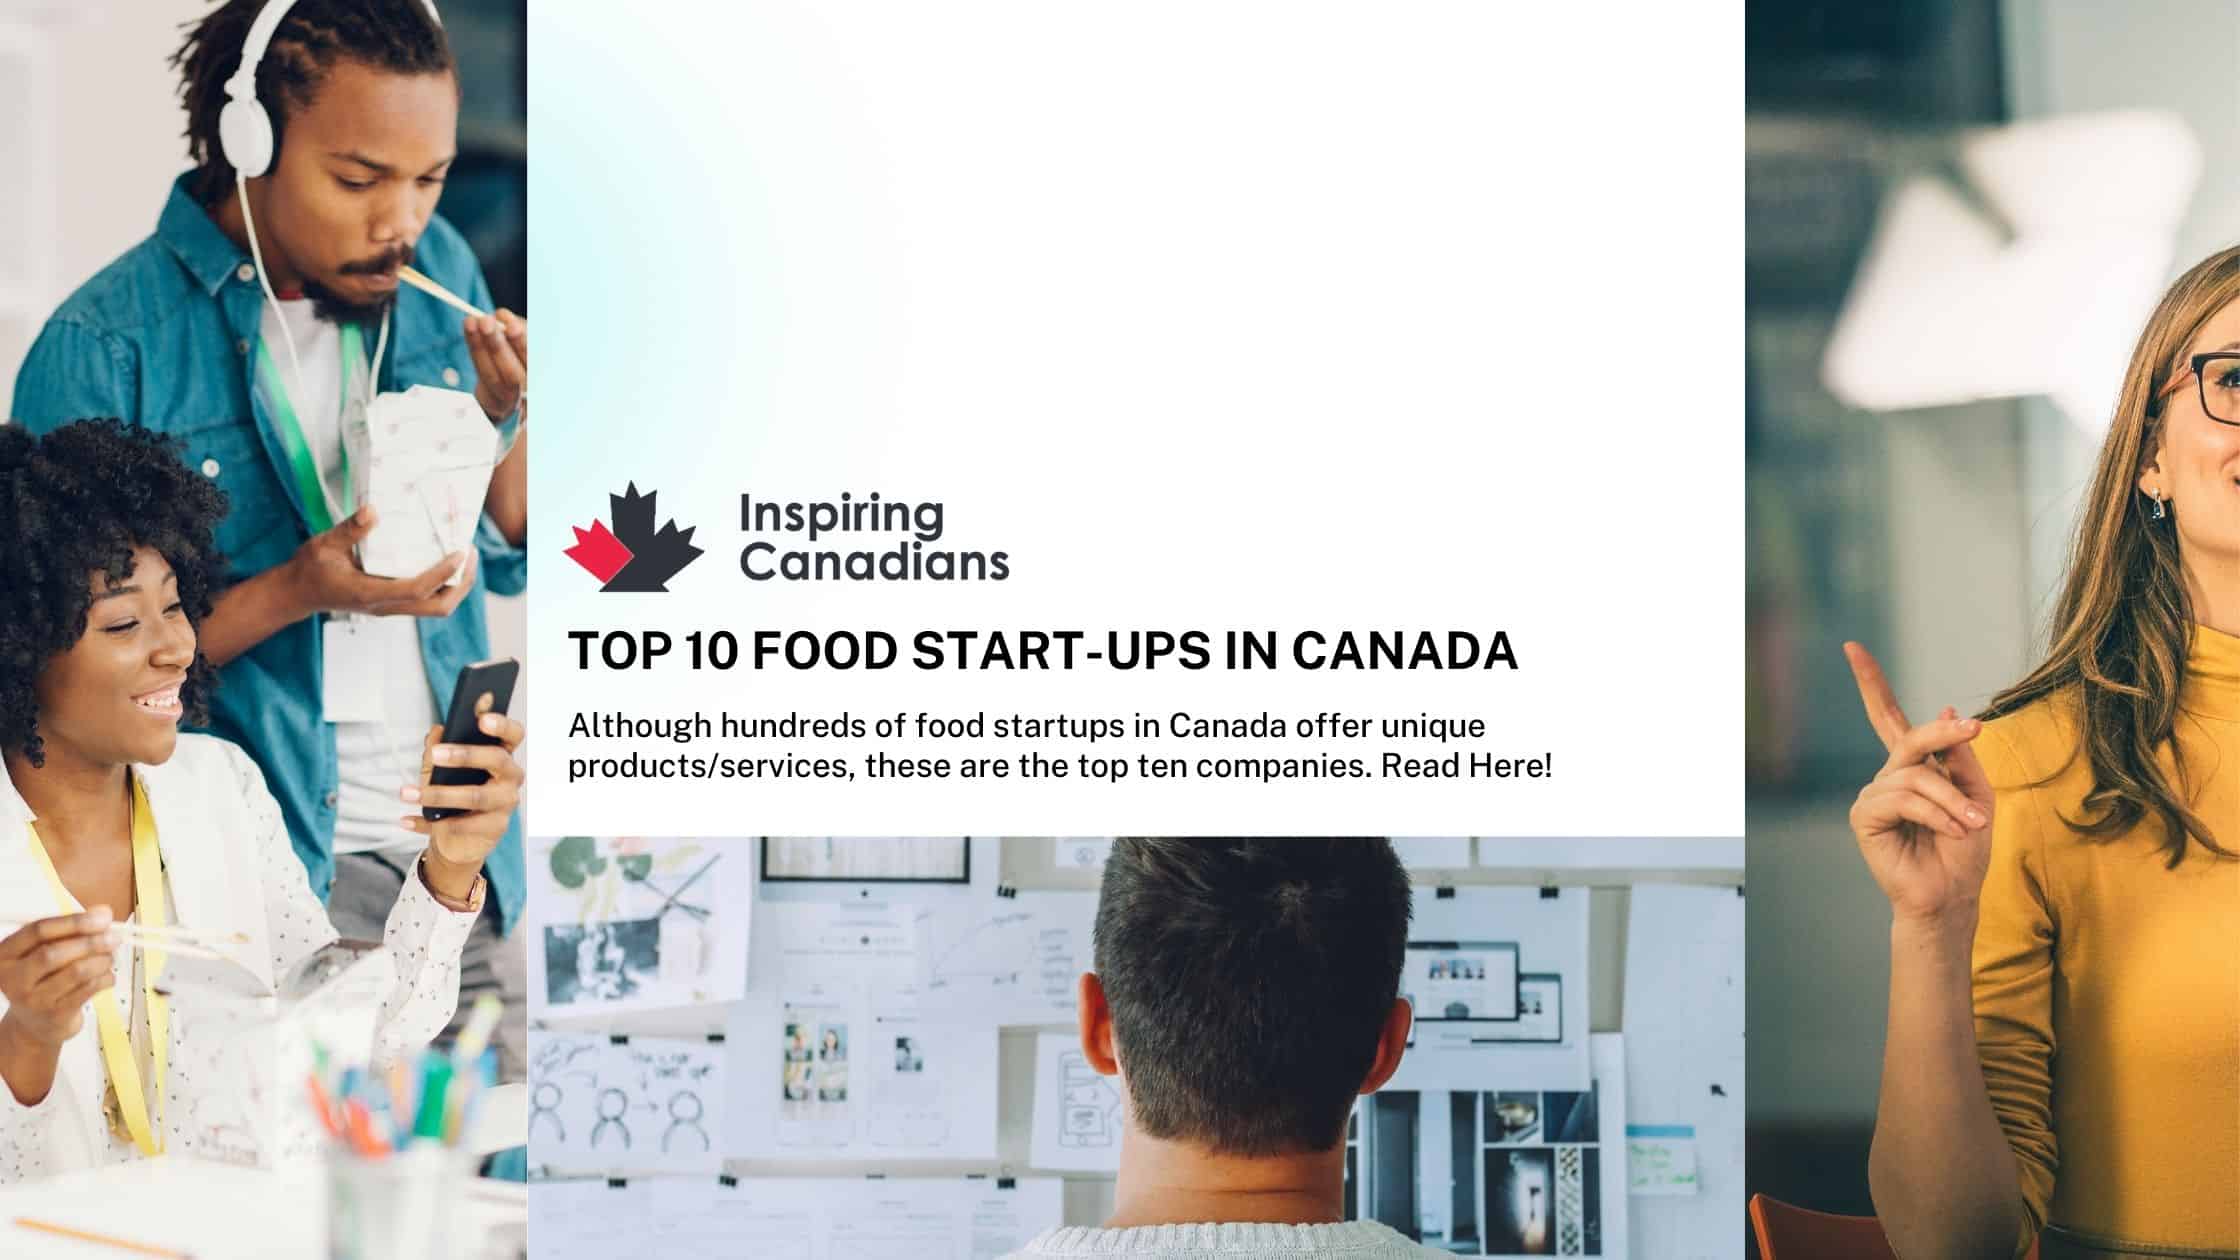 Top 10 food start-ups in Canada